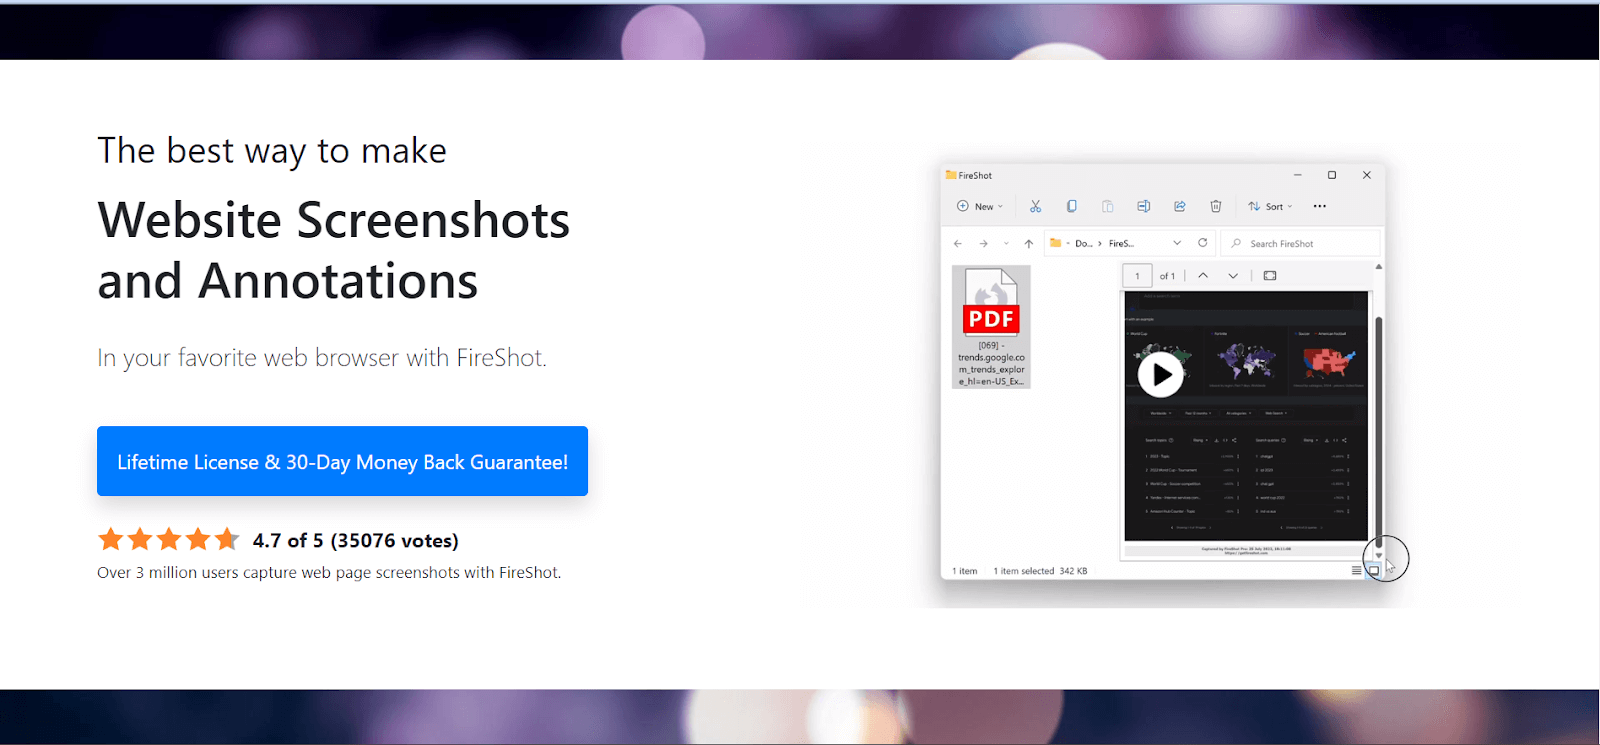 Web Screenshotting tool: FireShot